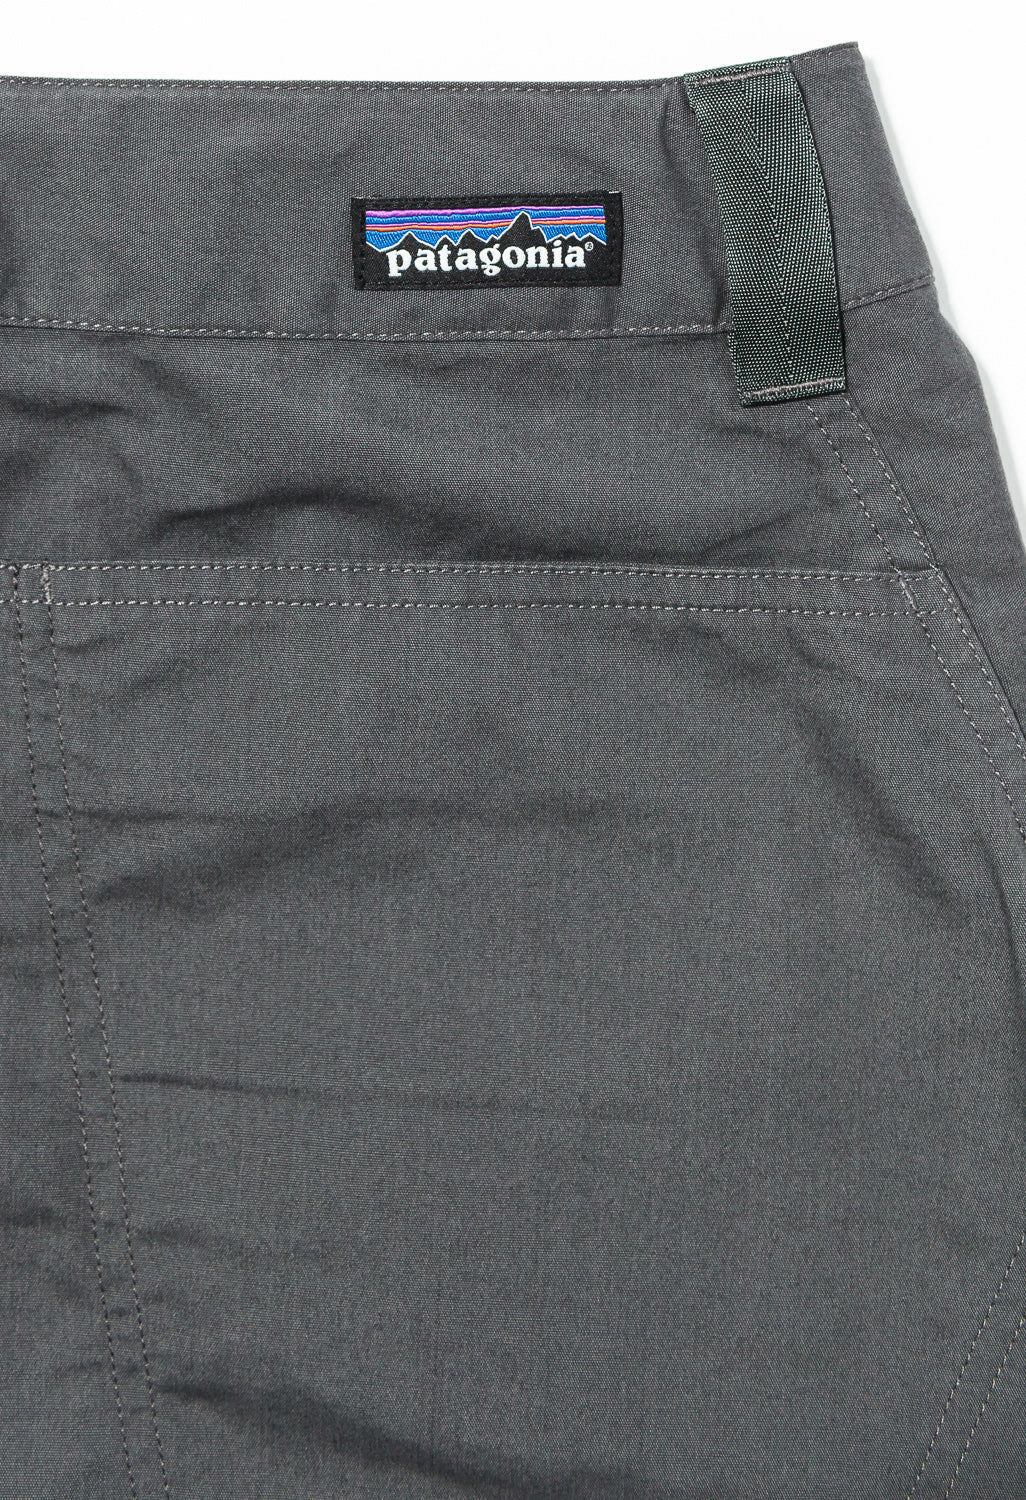 Patagonia Venga Rock Men's Shorts - Forge Grey